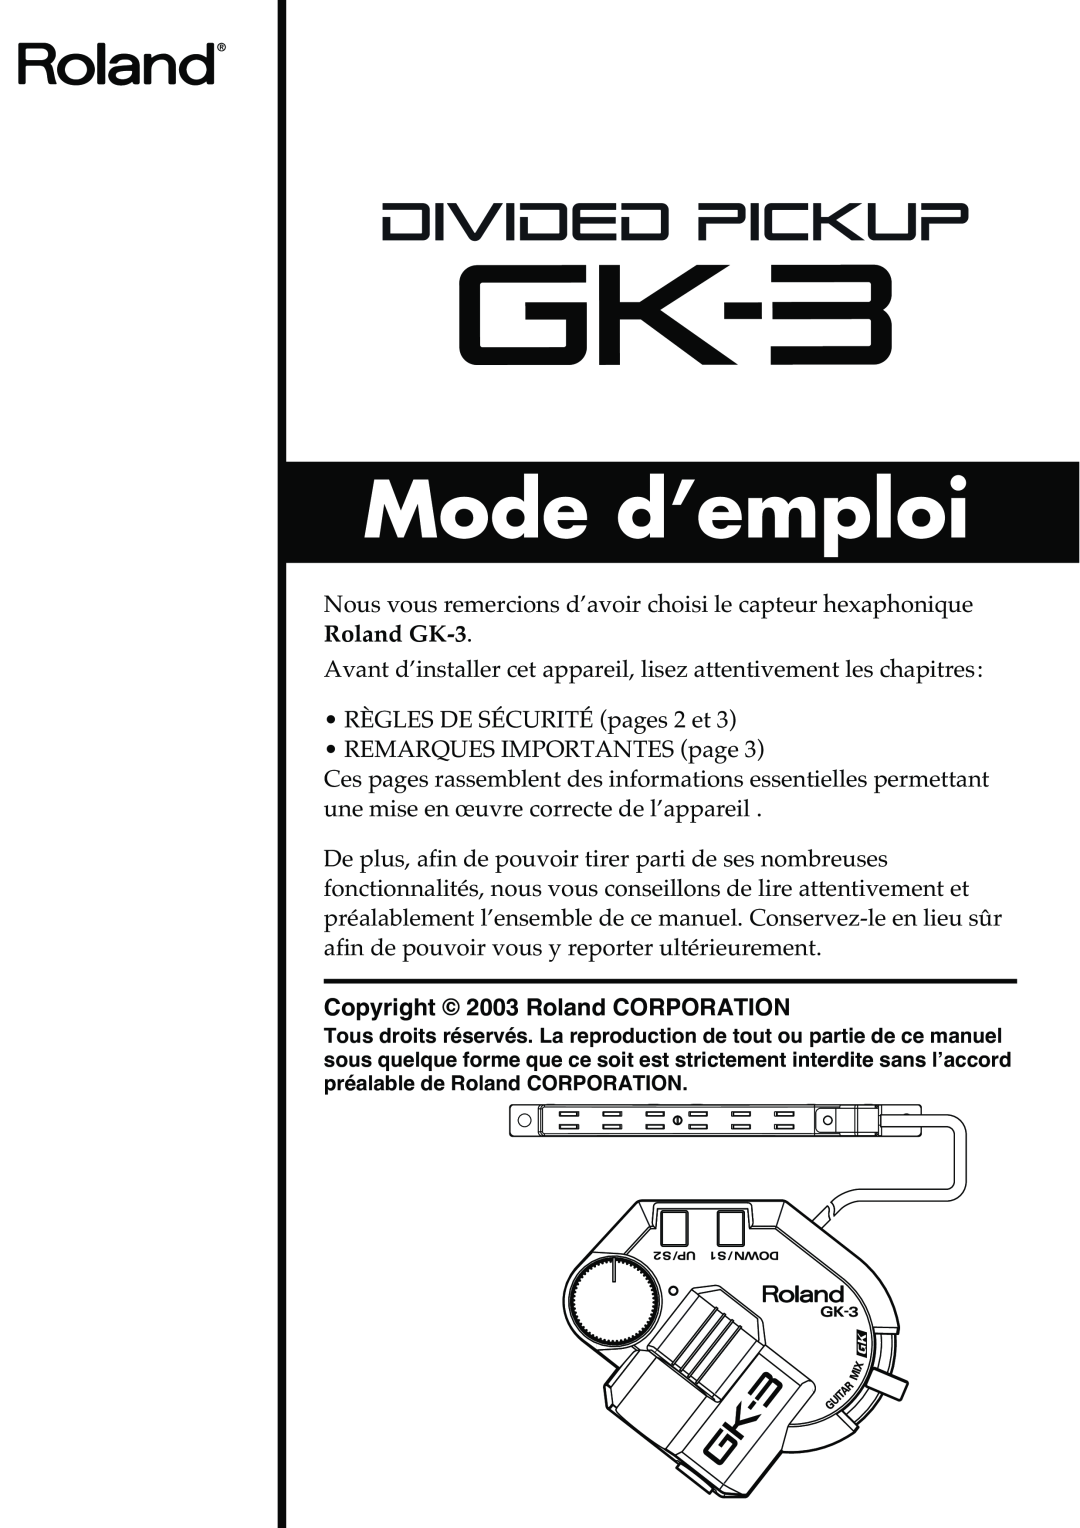 Roland GR-20 manual Mode d’emploi, Copyright 2003 Roland CORPORATION 